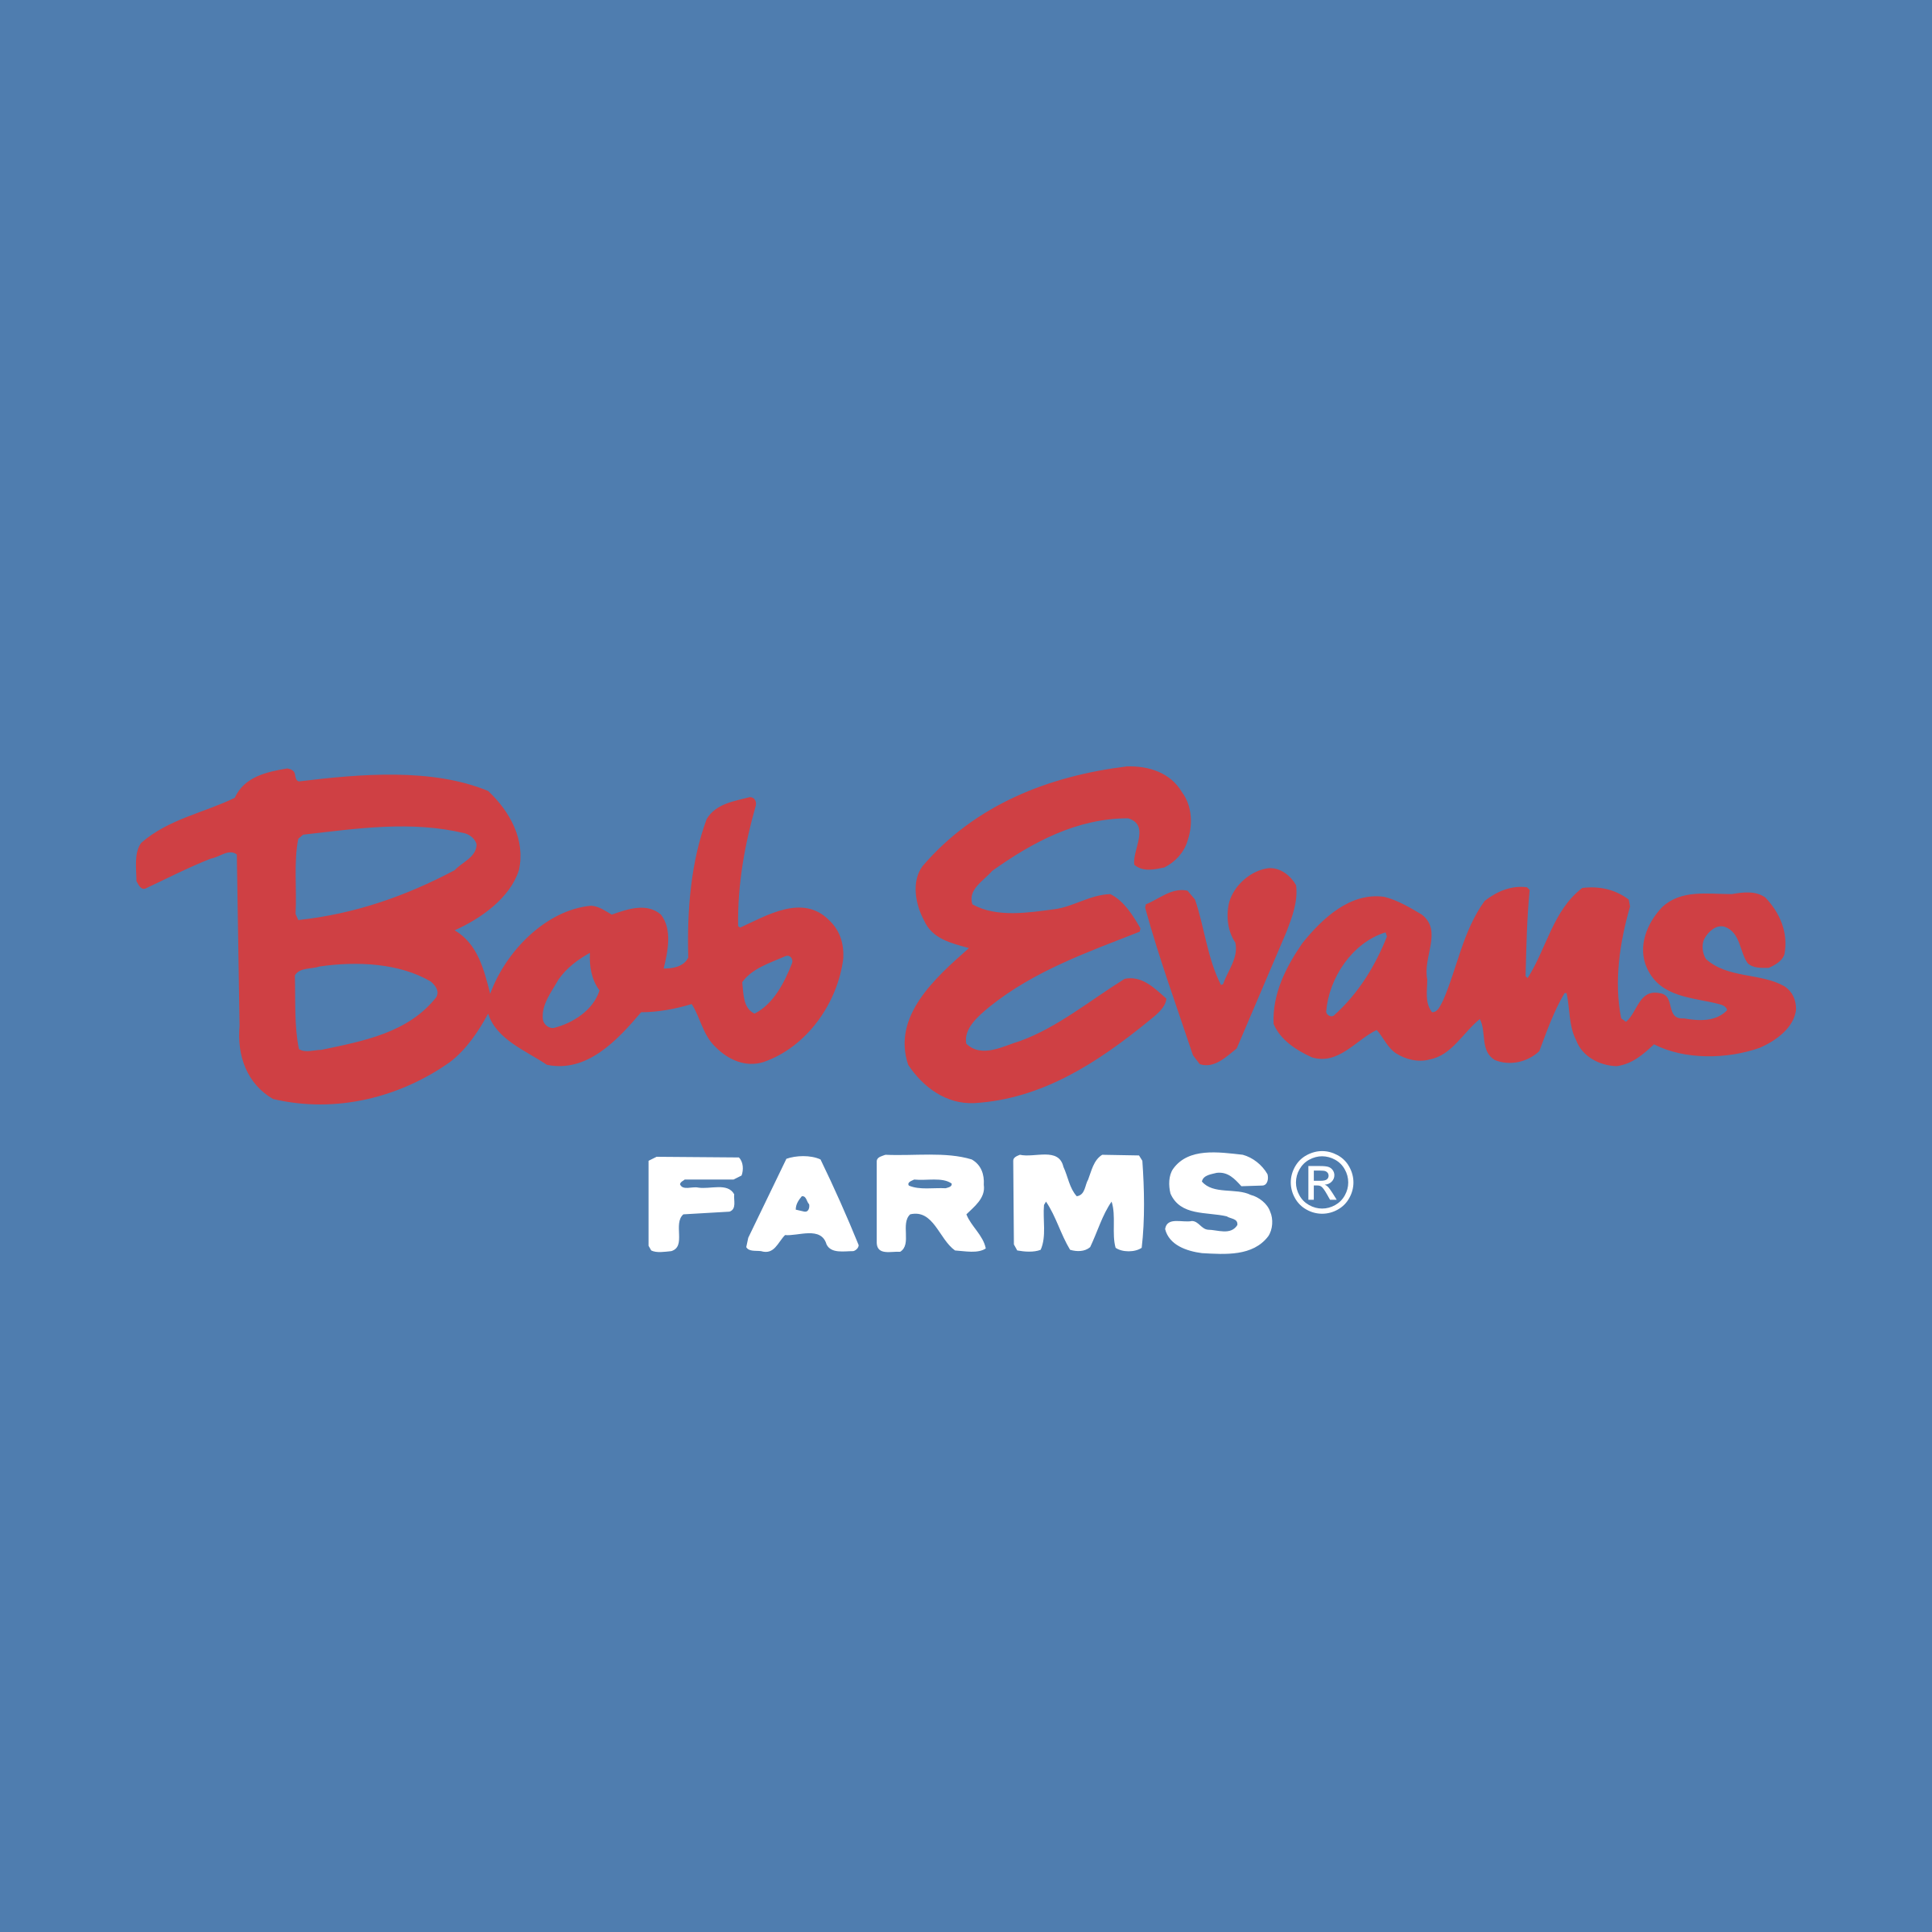 Bob Evans Farms Logo PNG Transparent & SVG Vector.